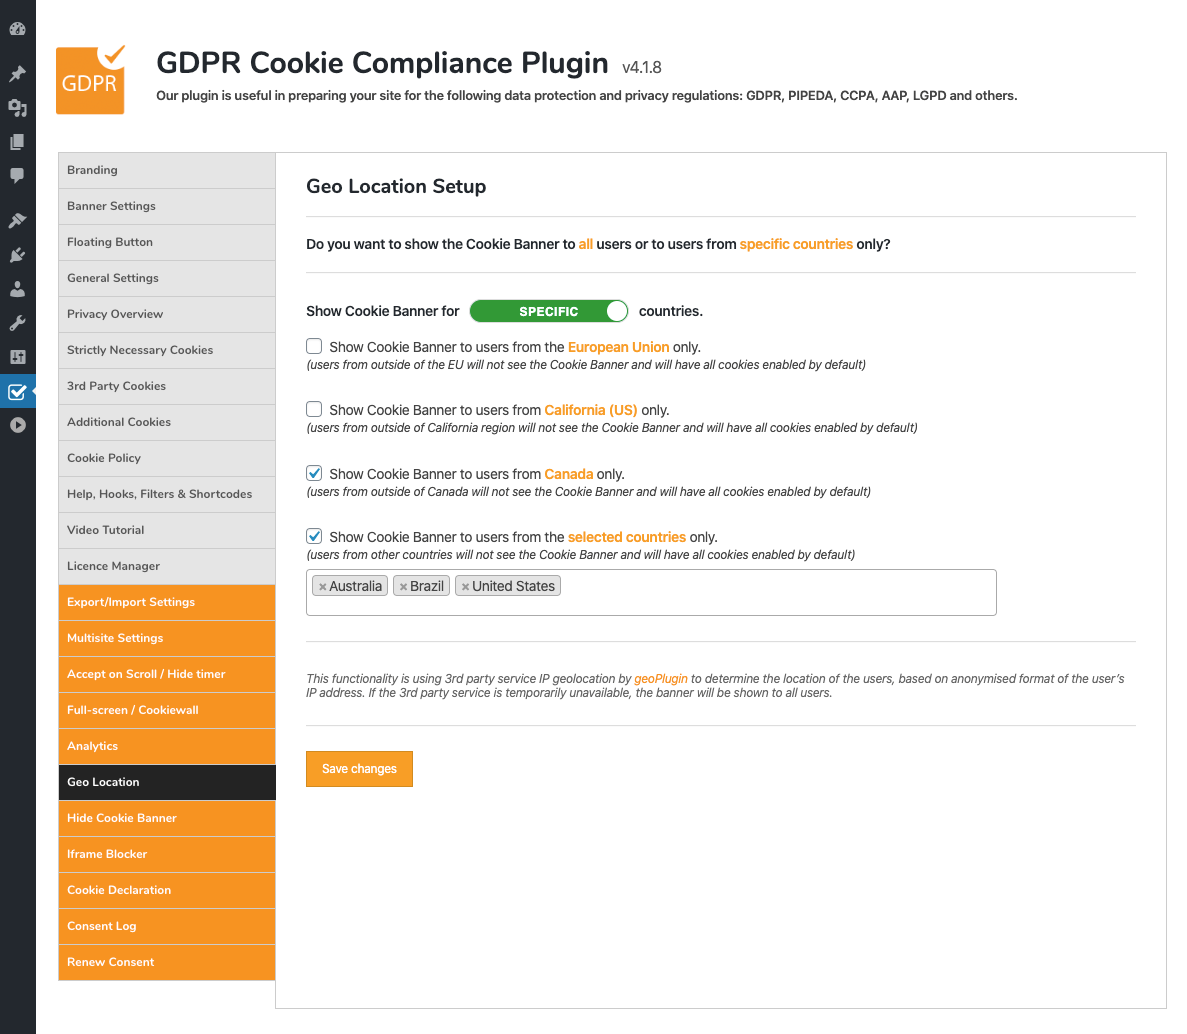 GDPR Cookie Compliance - Admin - Geo Location [Premium]